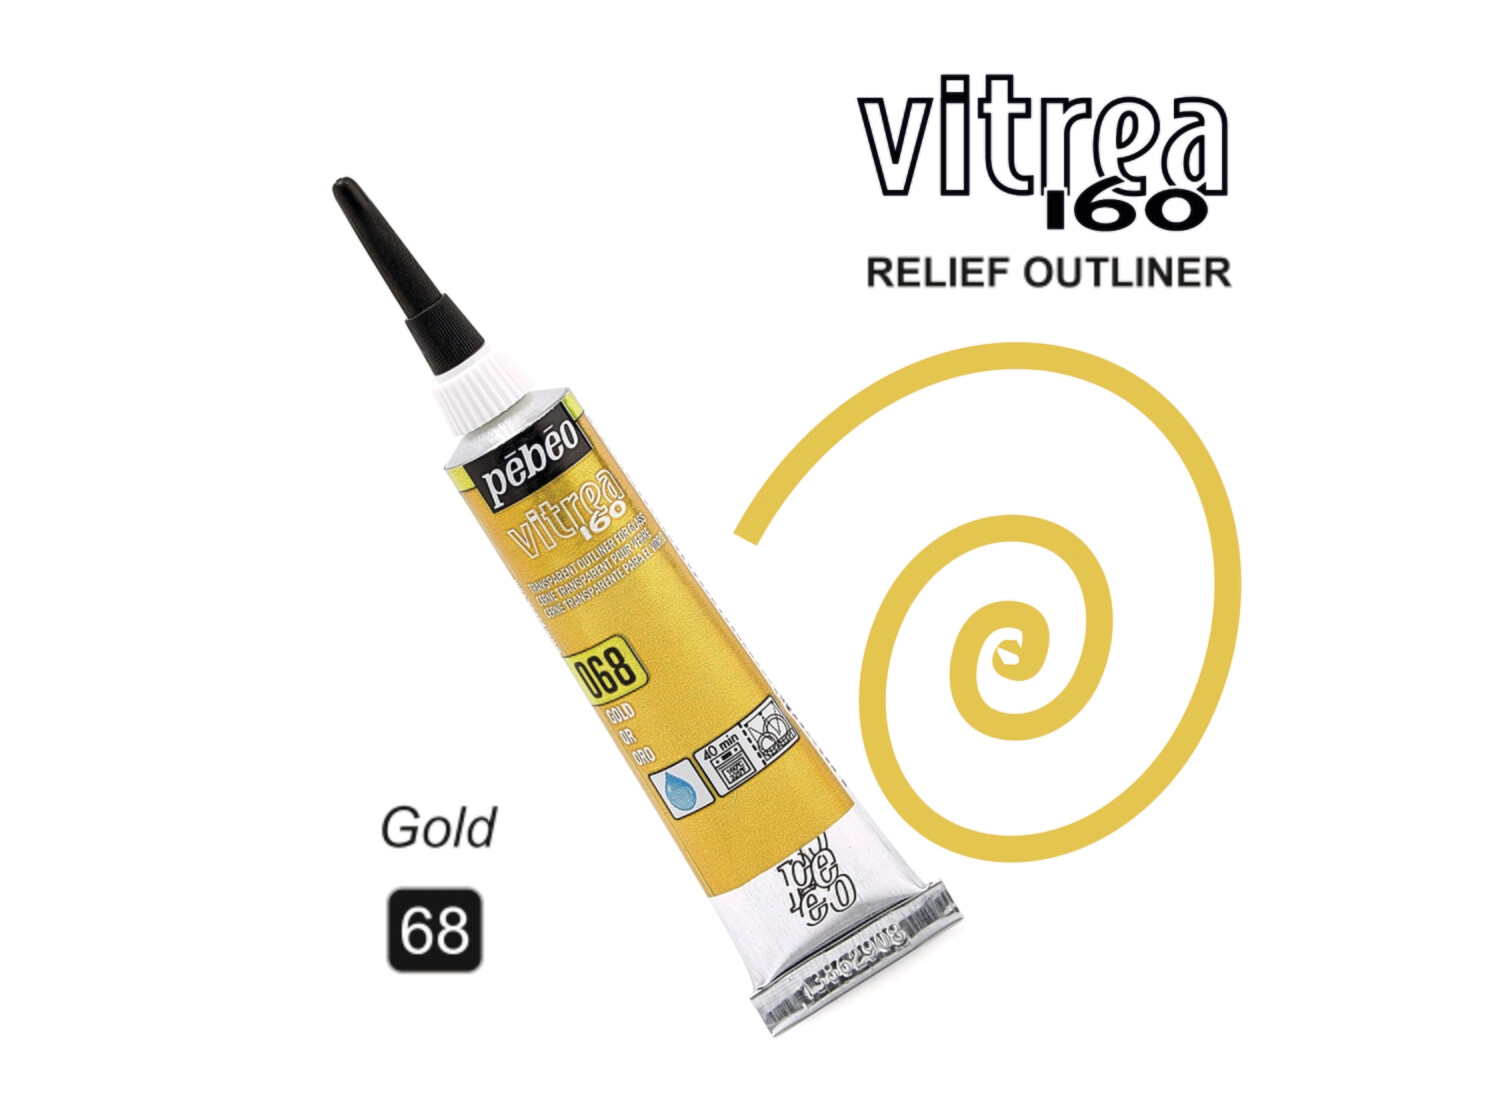 Vitrea-160 20ml 68 Gold